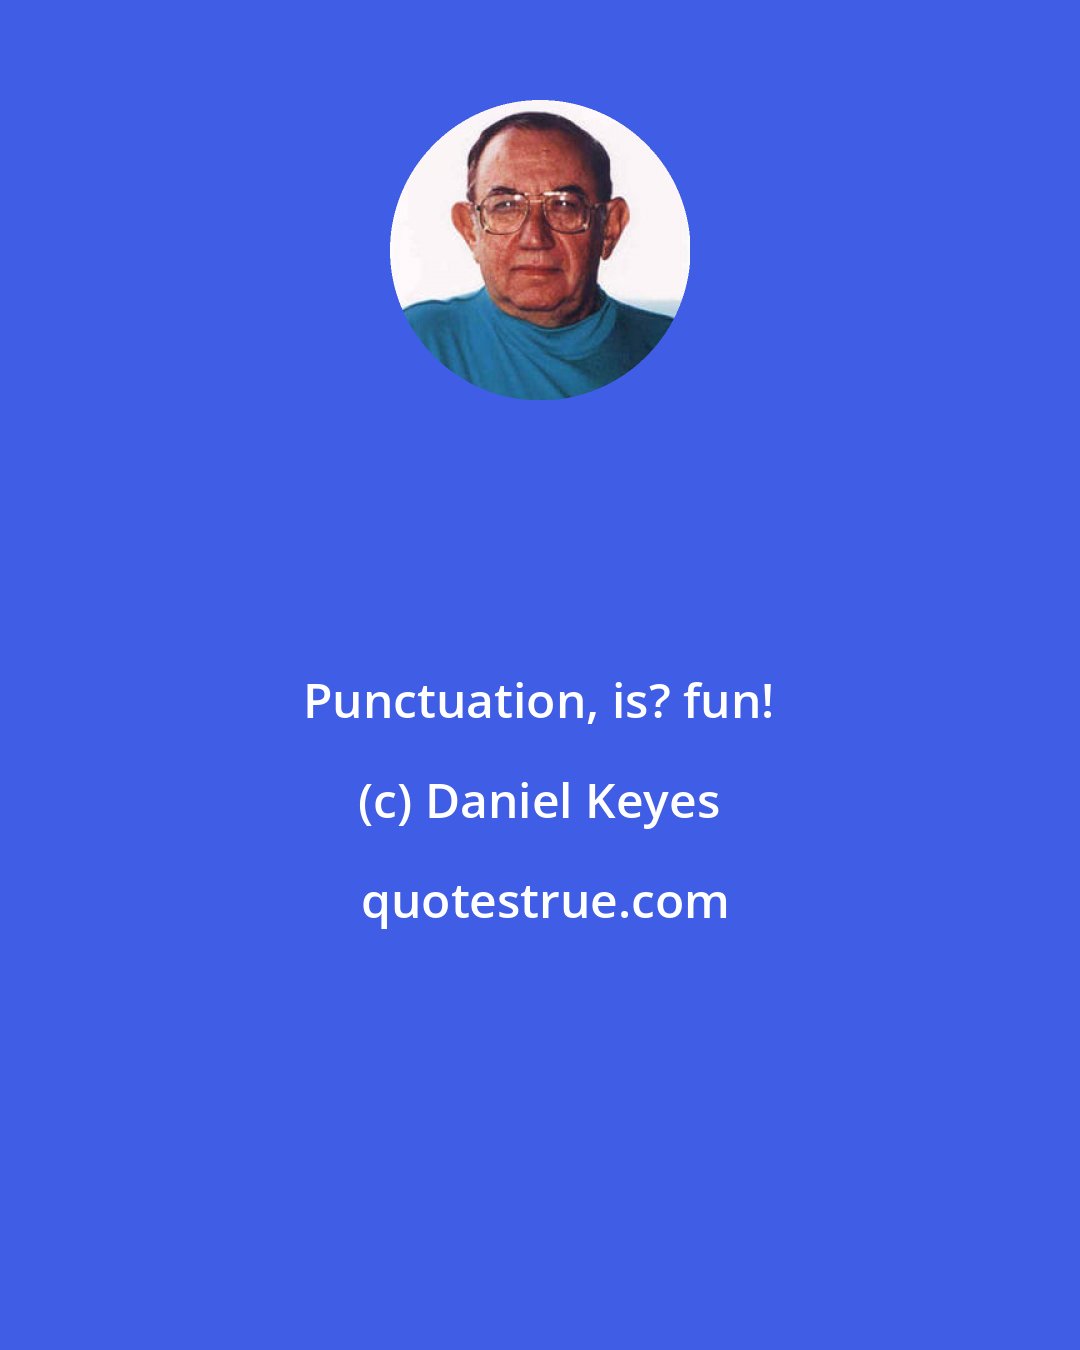 Daniel Keyes: Punctuation, is? fun!